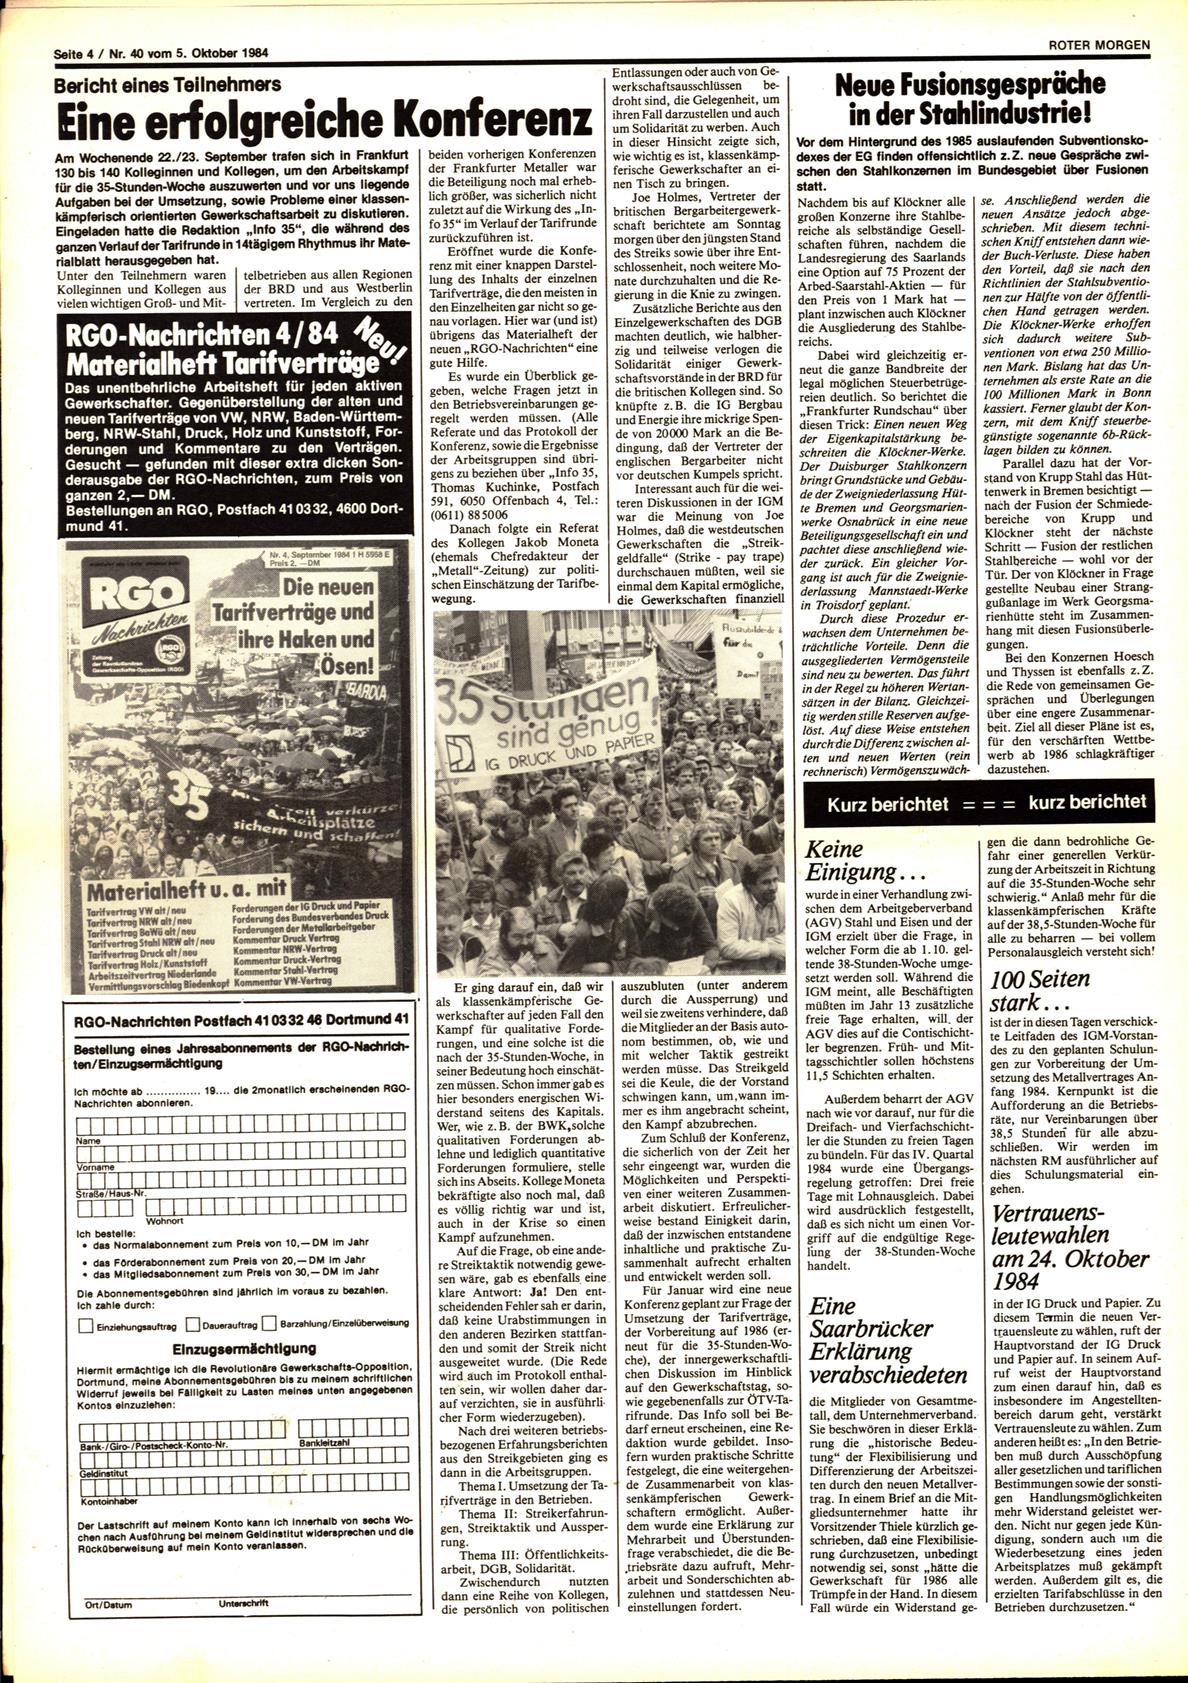 Roter Morgen, 18. Jg., 5. Oktober 1984, Nr. 40, Seite 4